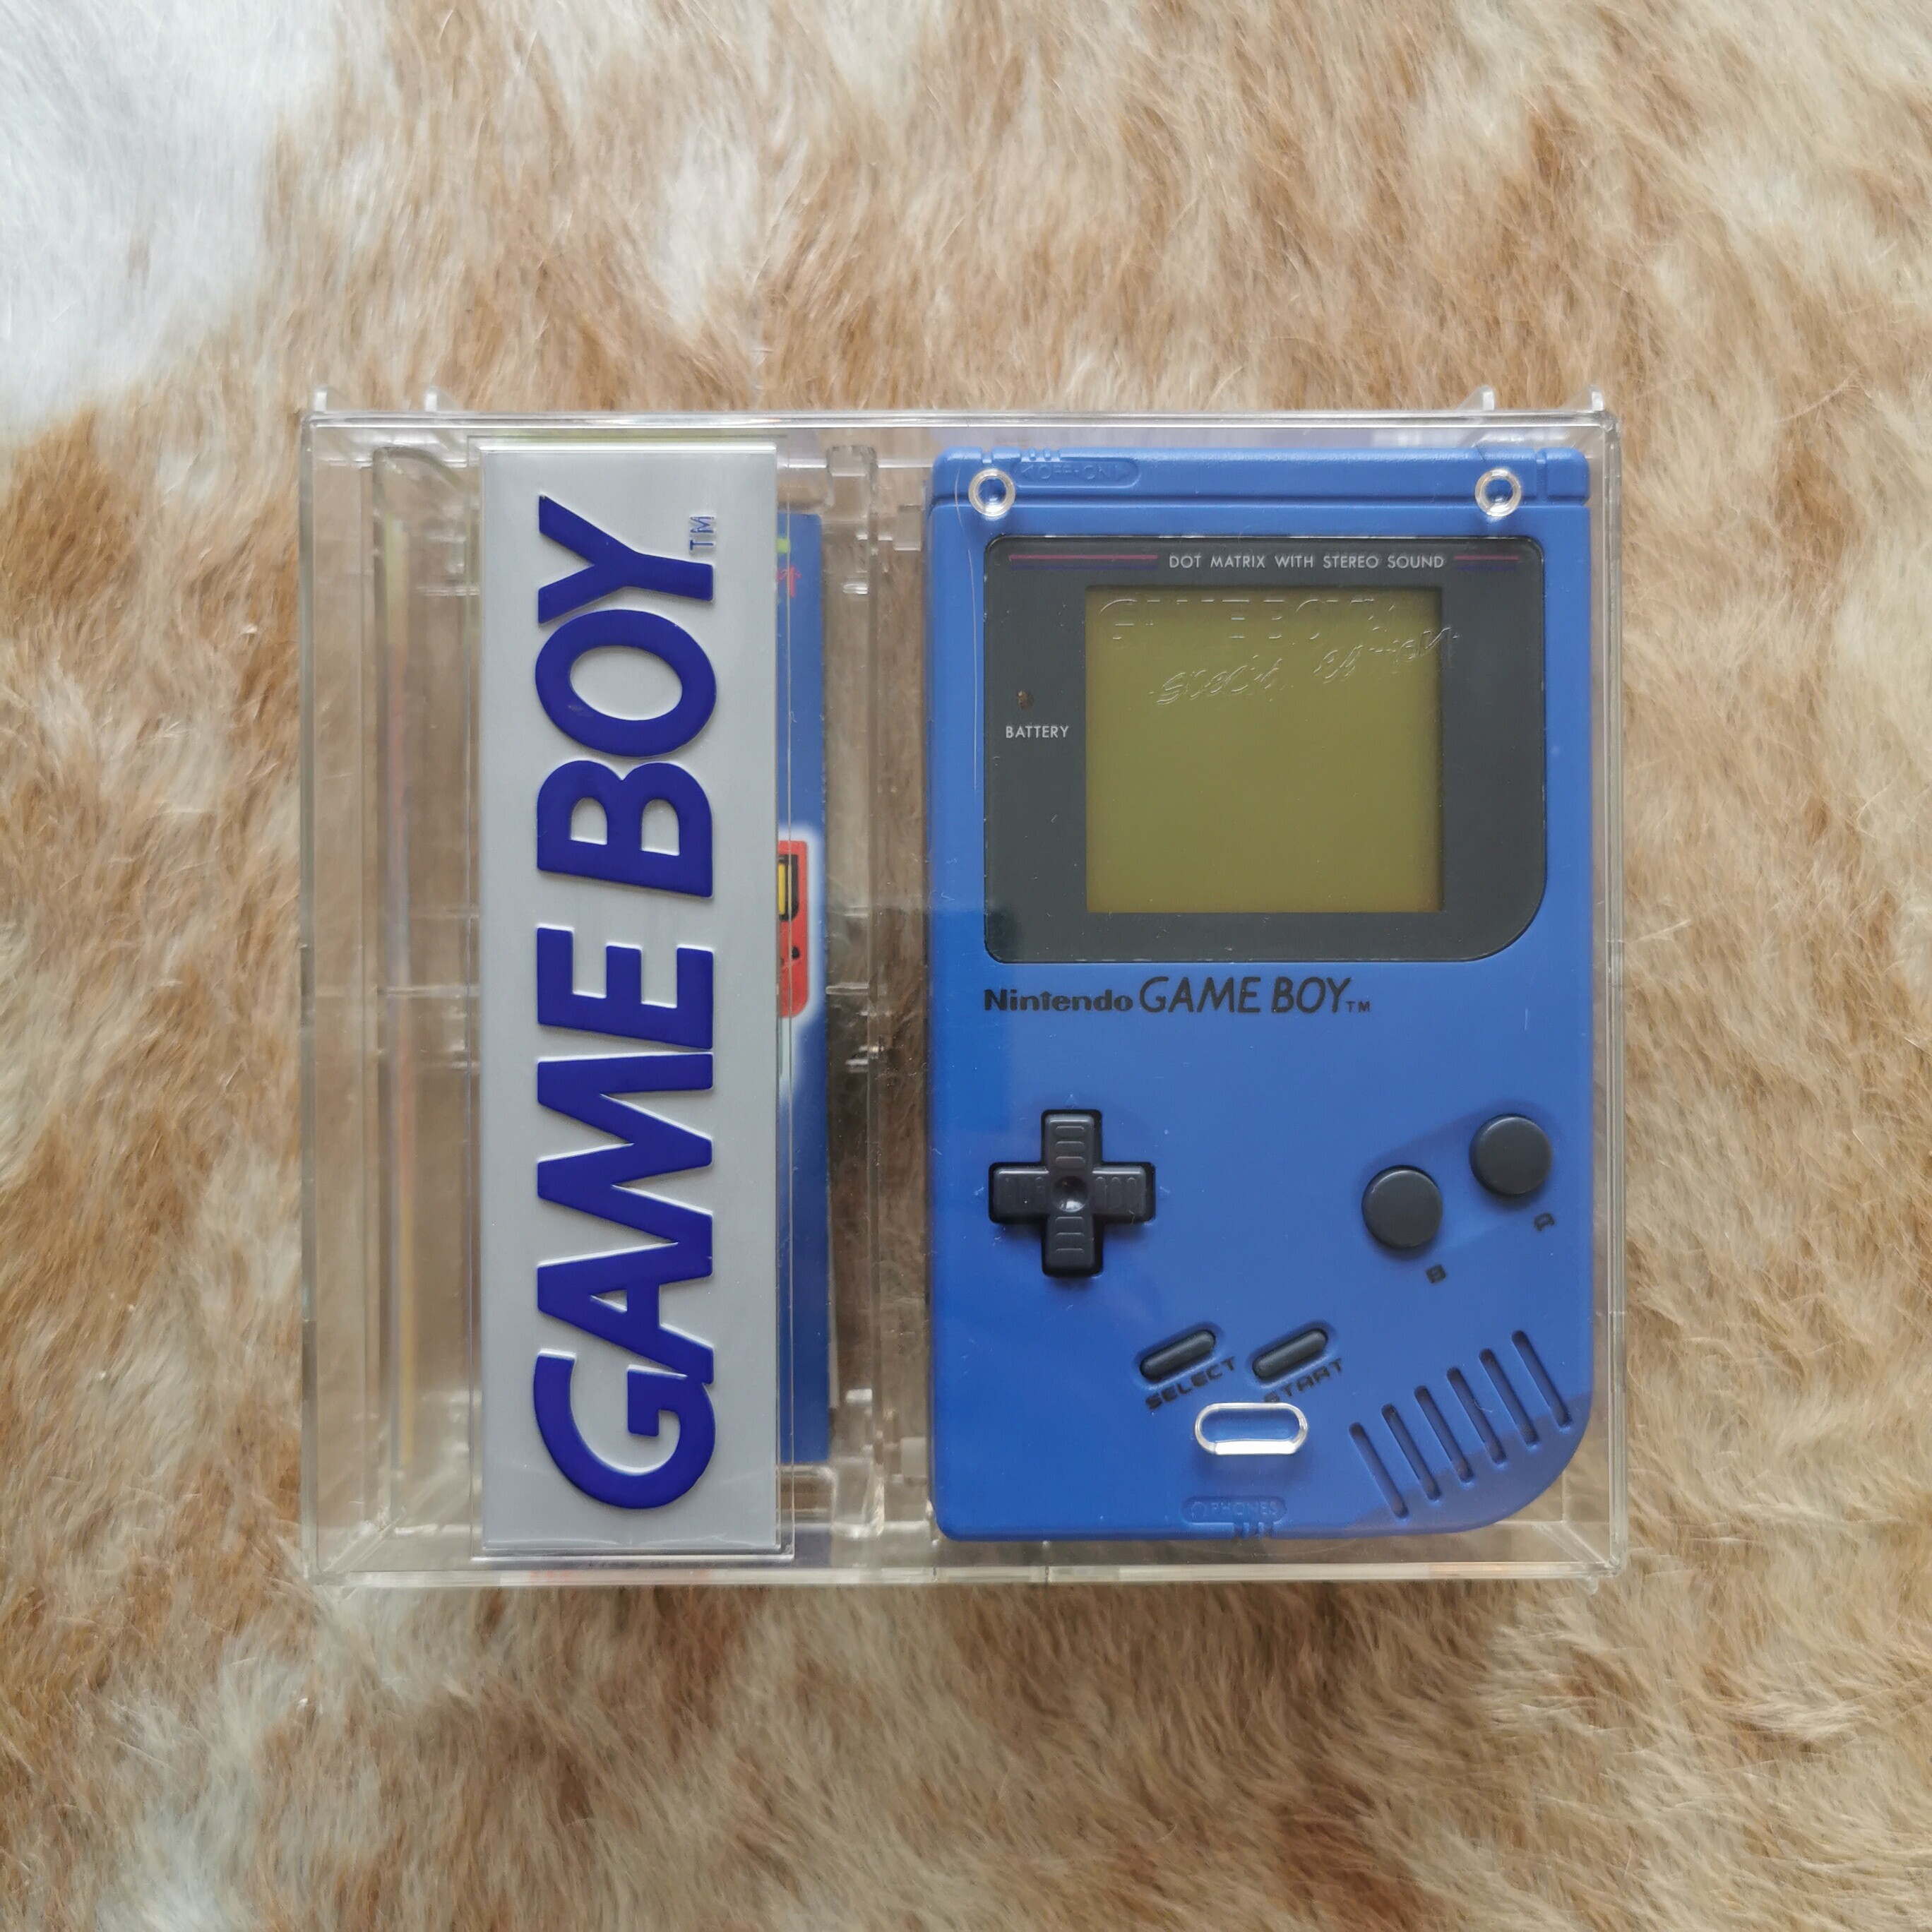  Nintendo Game Boy Crystal Case Blue Console [NOE]